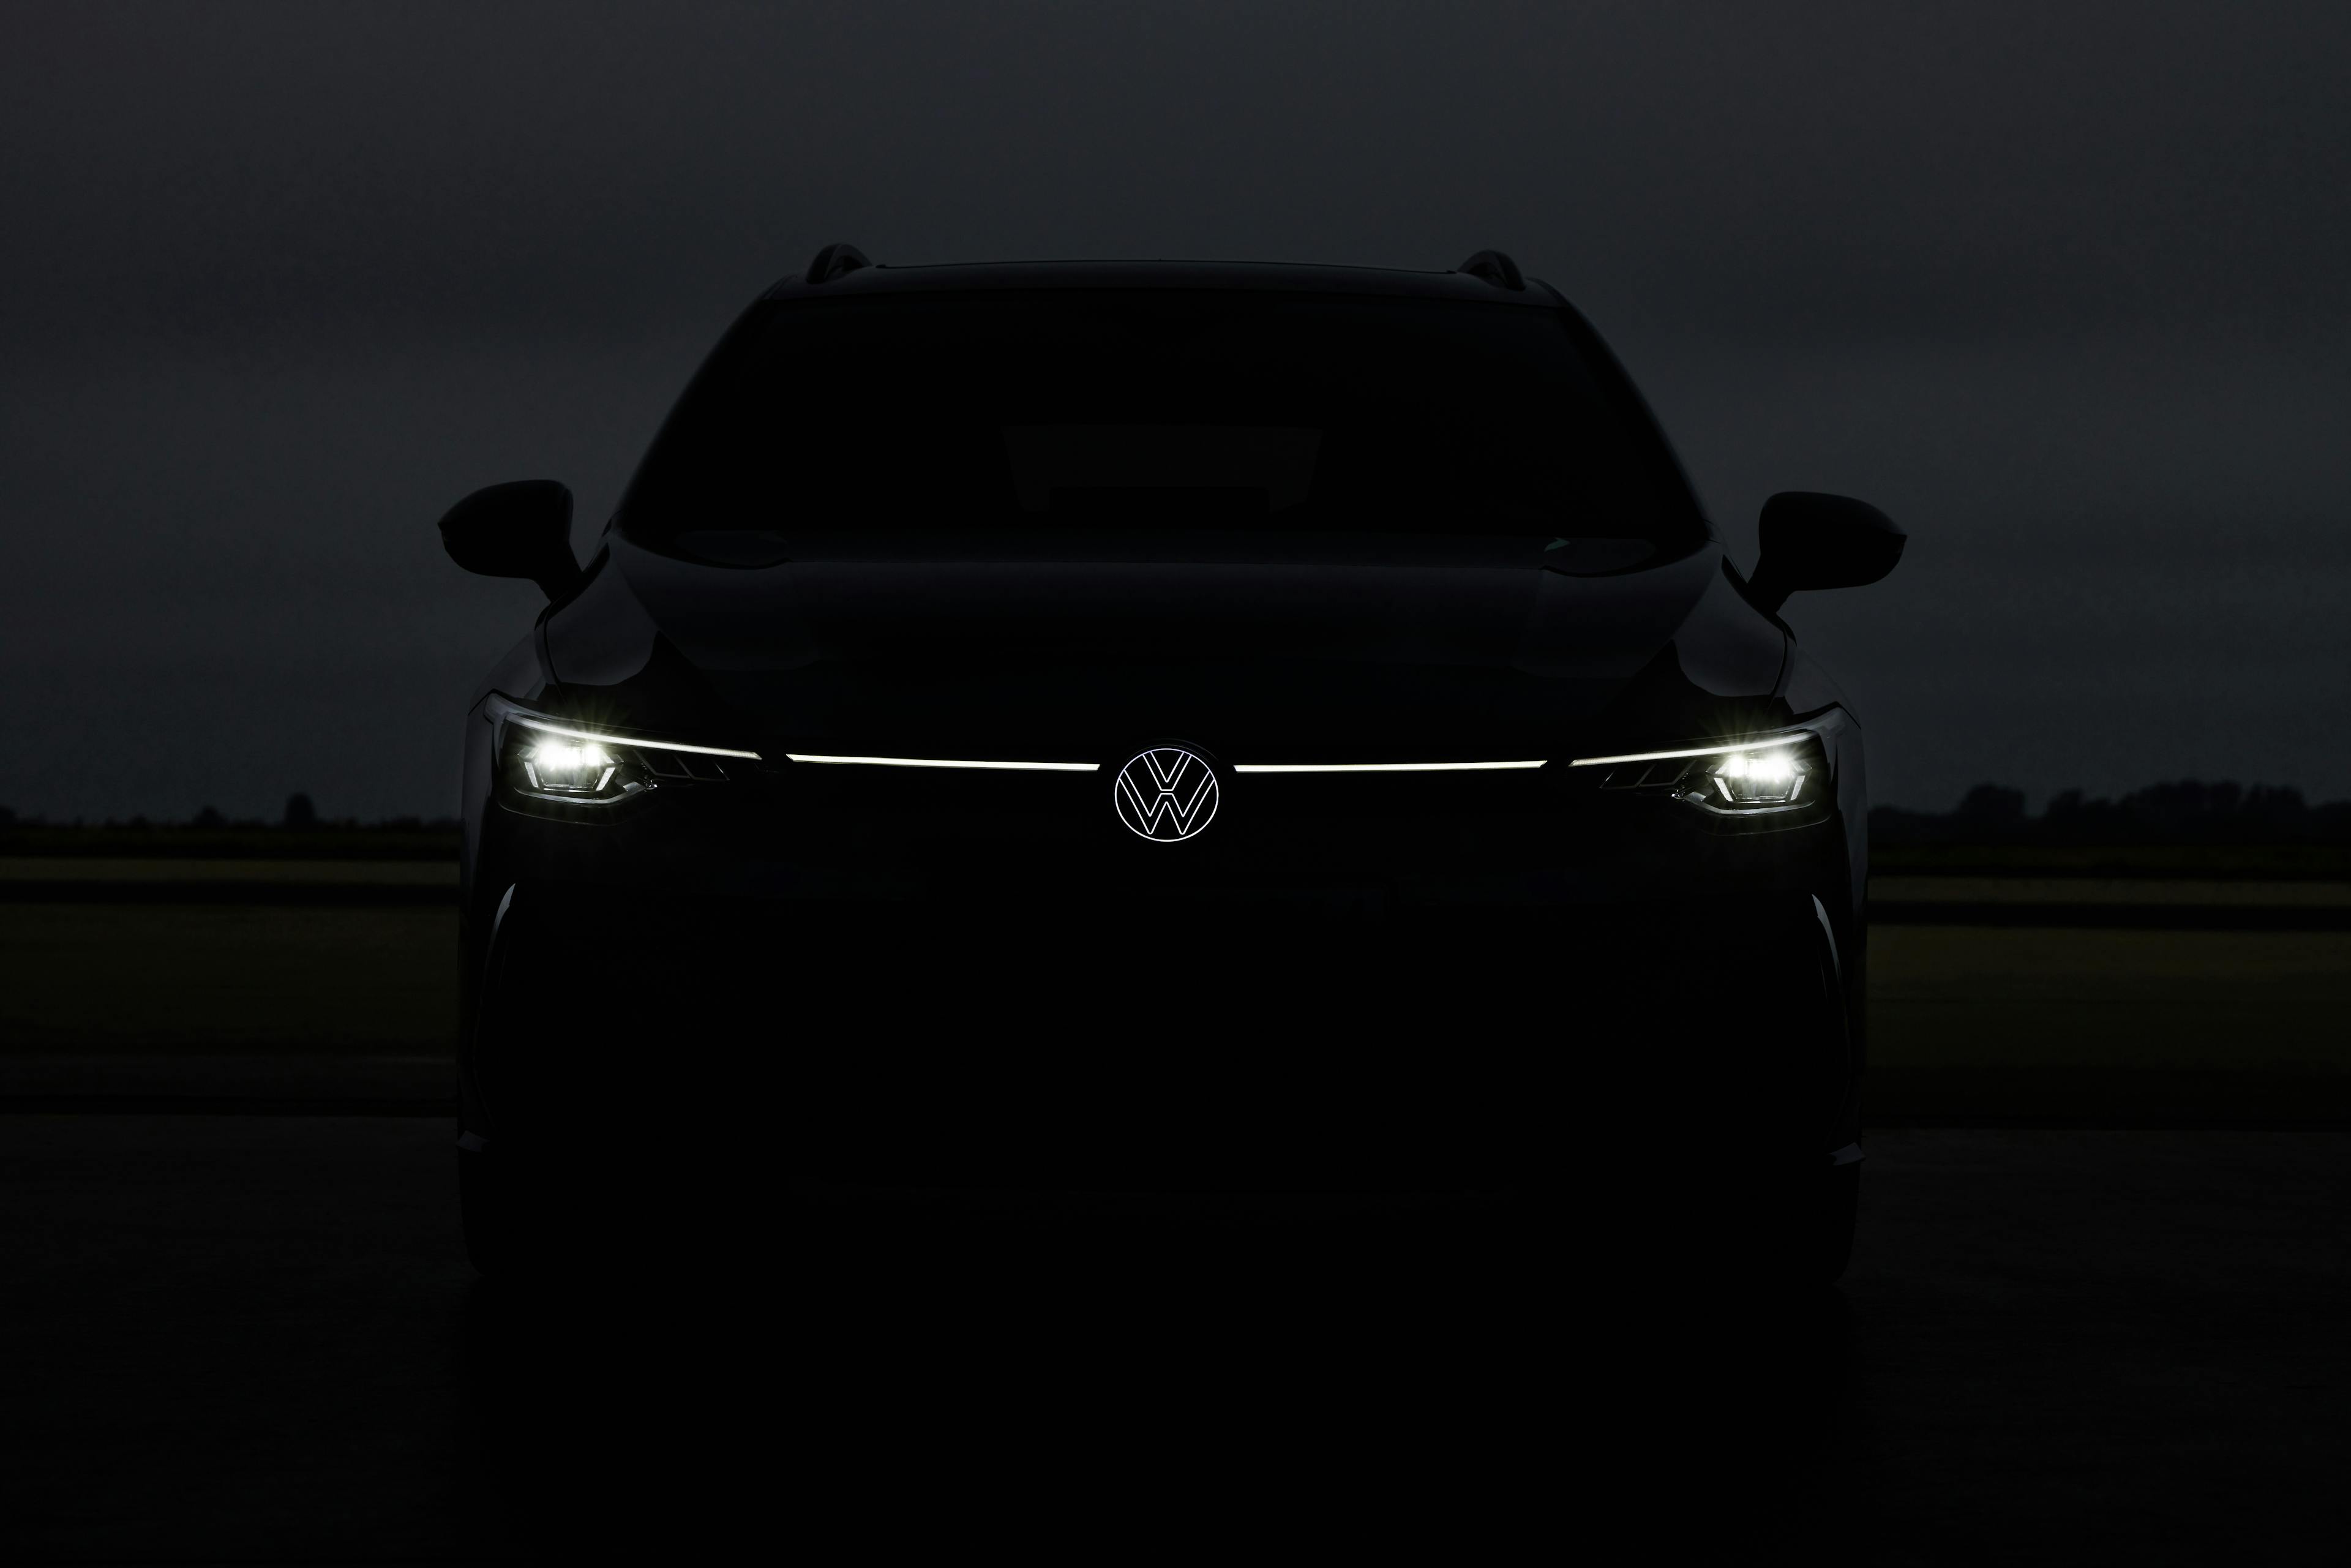 Das illuminierte VW-Logo im Kühlergrill